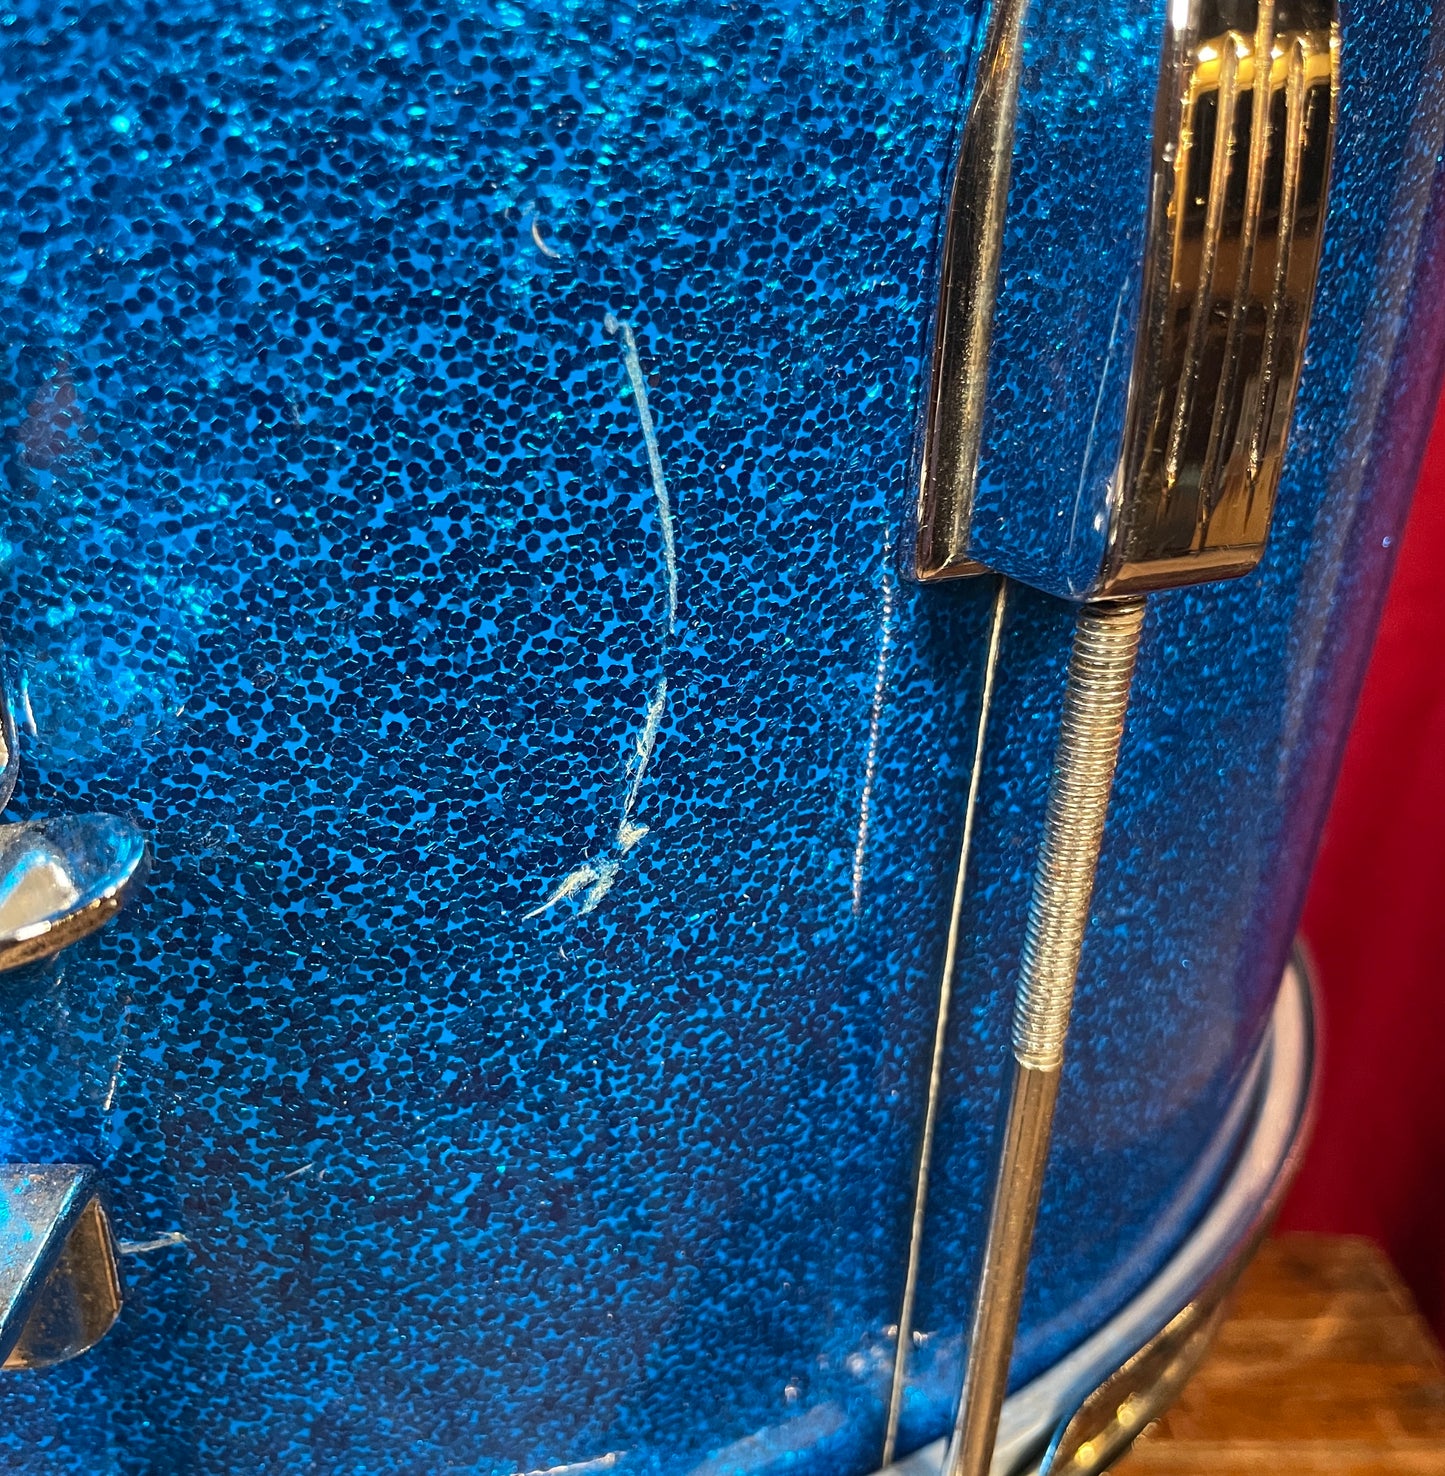 1963 Ludwig 14x14 Club Date Floor Tom Drum Blue Sparkle